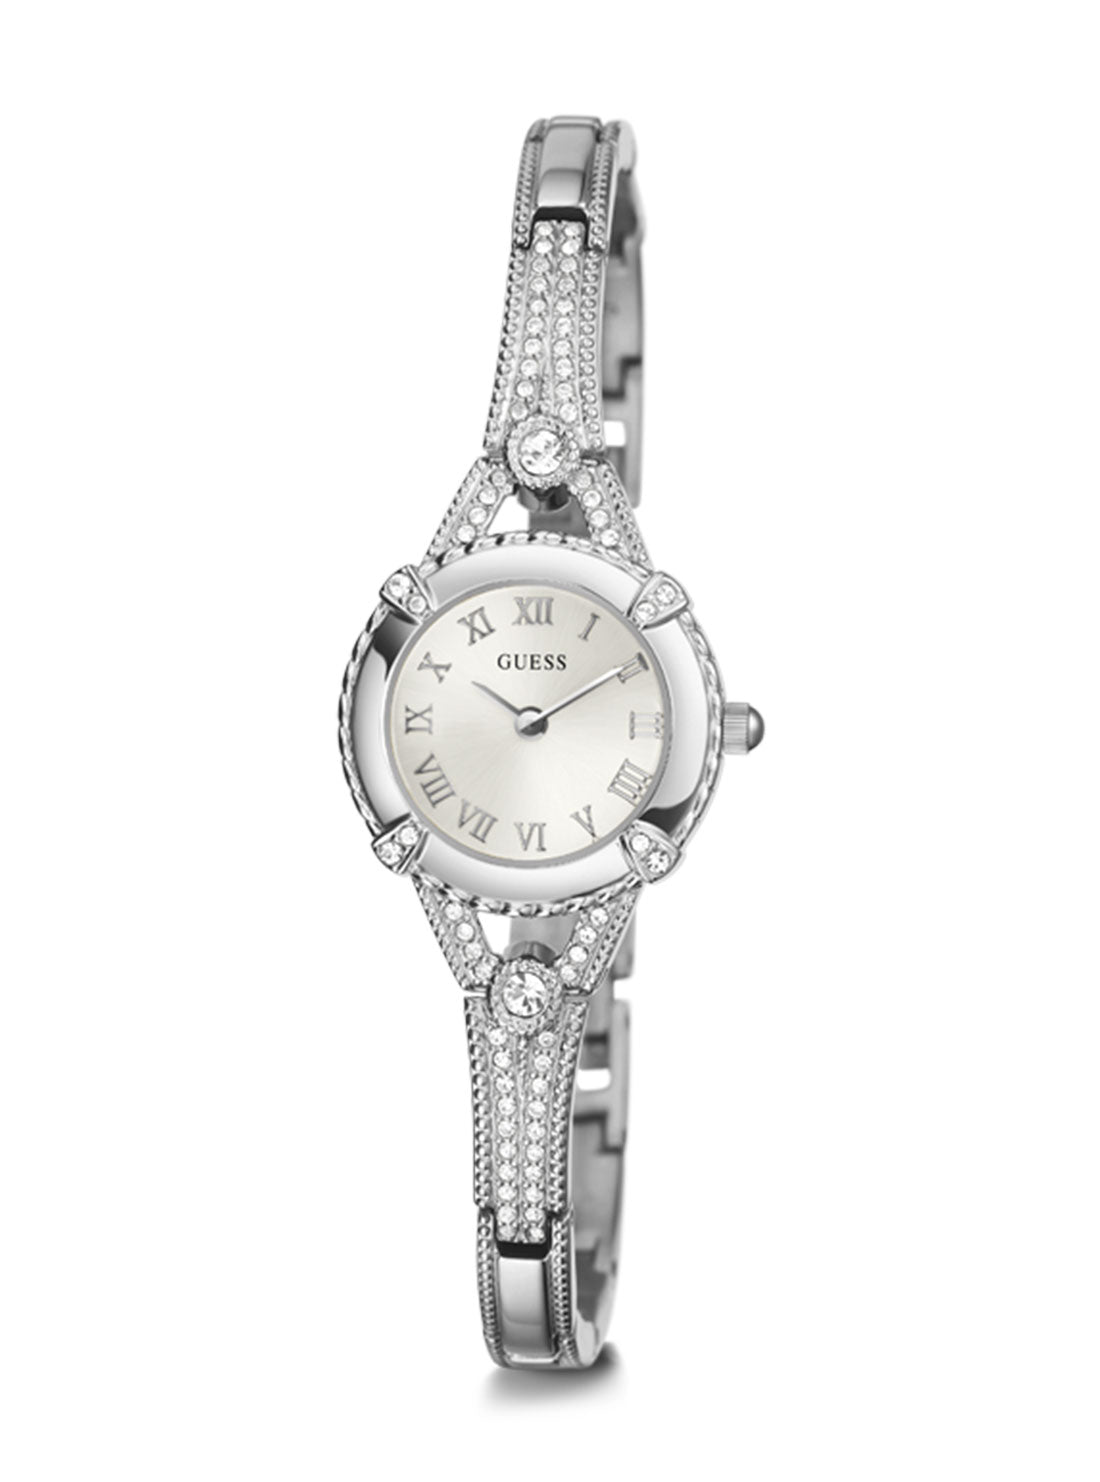 GUESS Women's Silver Angelic Glitz Watch W0135L1 Full View